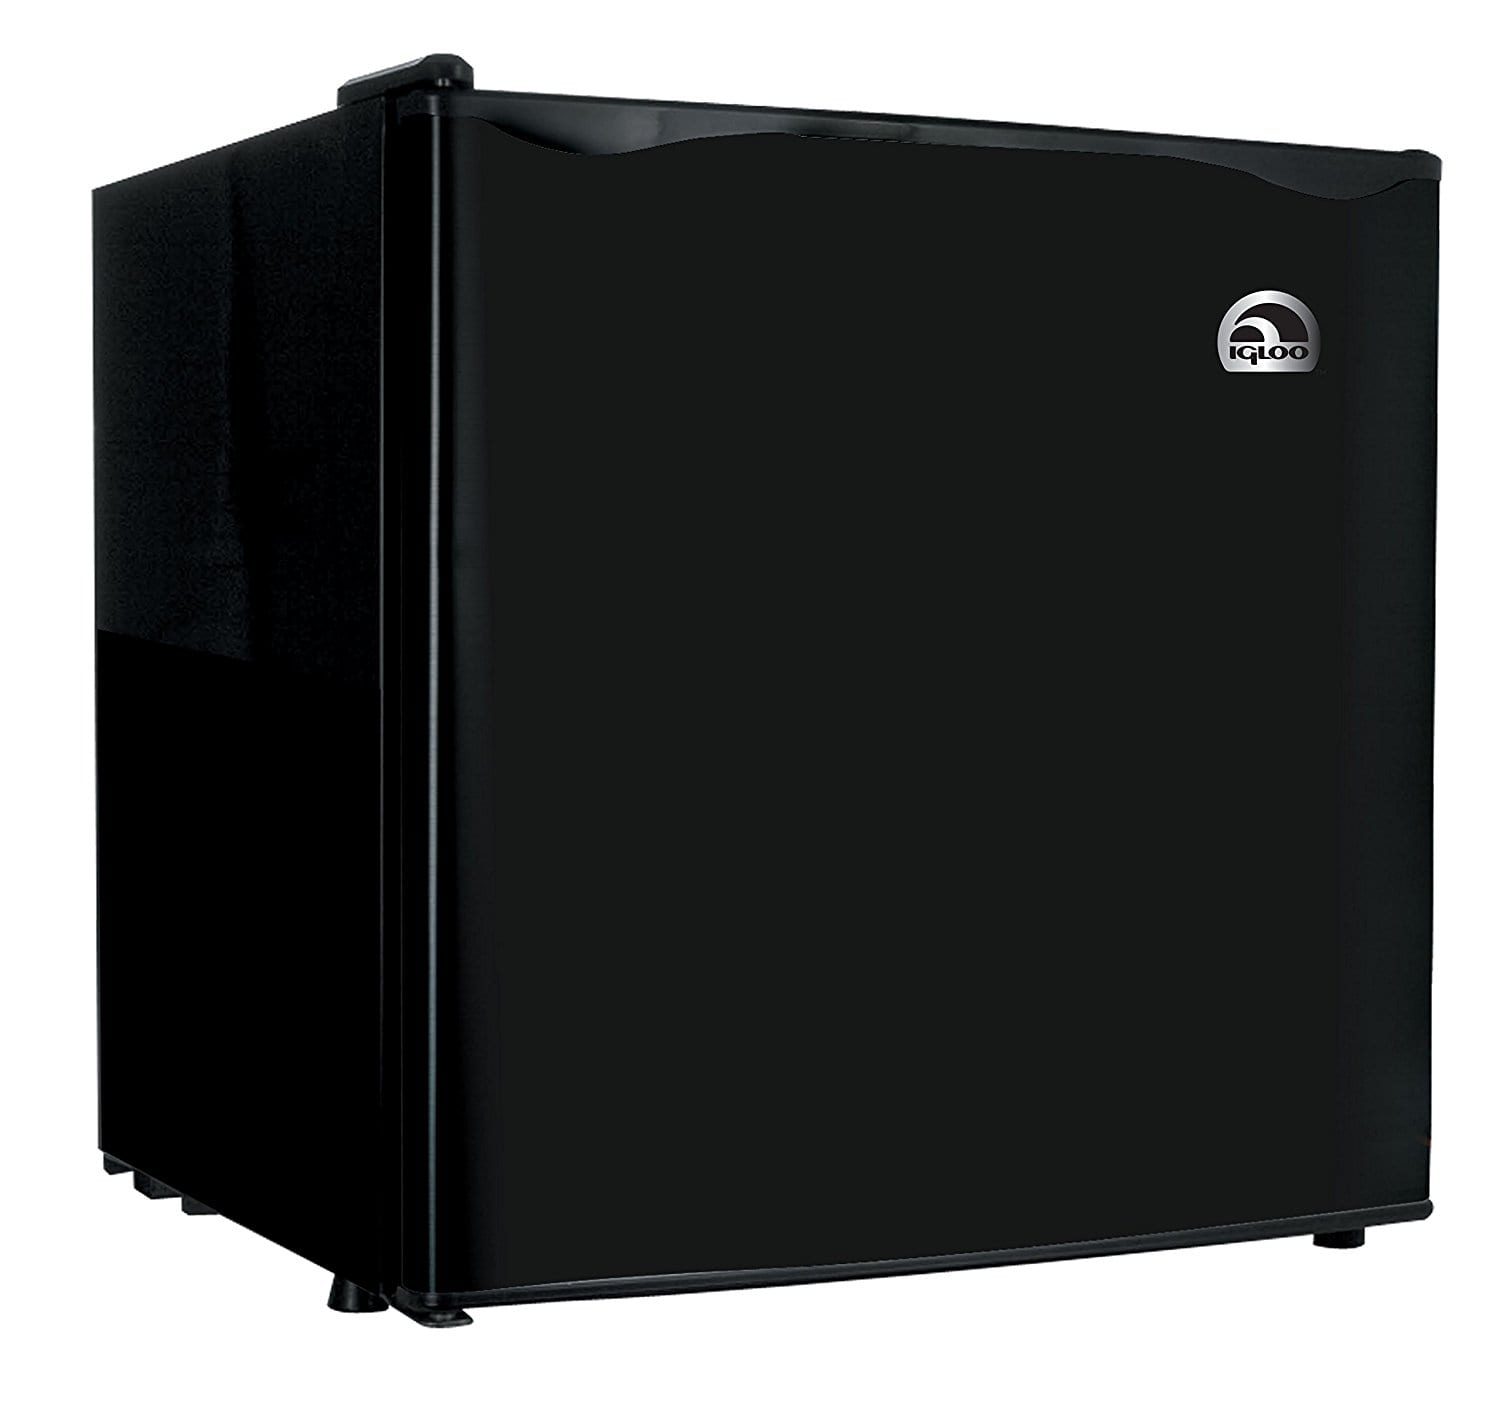 Best Mini Compact Refrigerators 2017: Black Igloo Fridge 2018